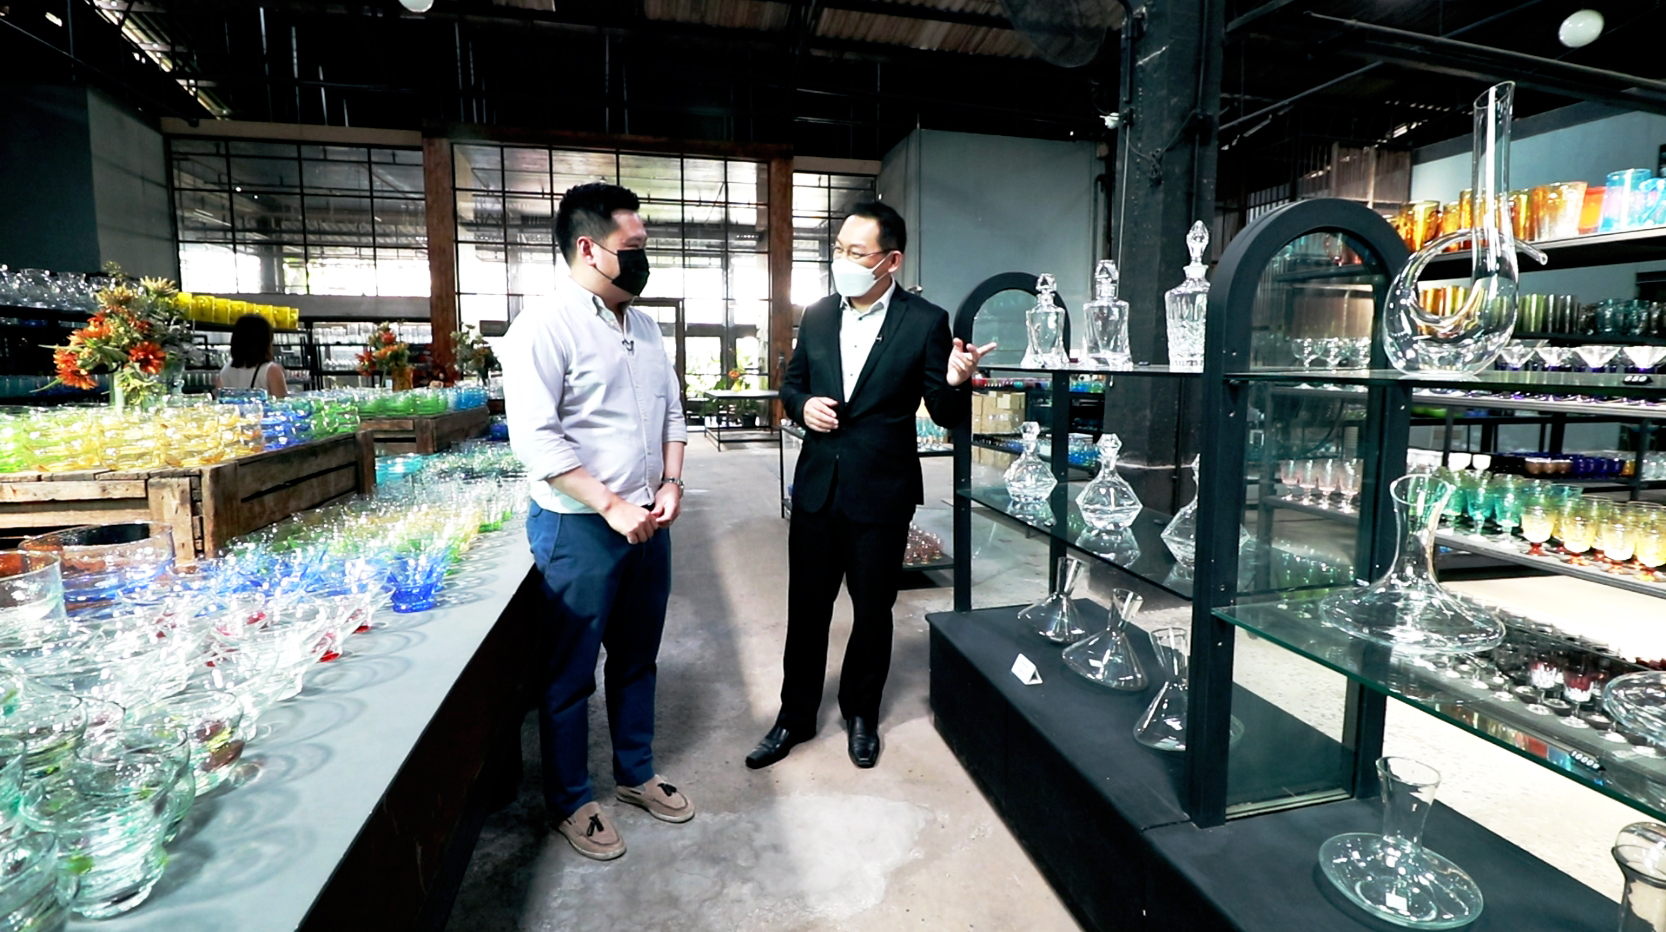 BTimes: 'Eastern Glass EP.1' โรงงานแก้วบูรพา ย้อนรอยโรงงานผลิตแก้วทำมือเก่าแก่ในไทย